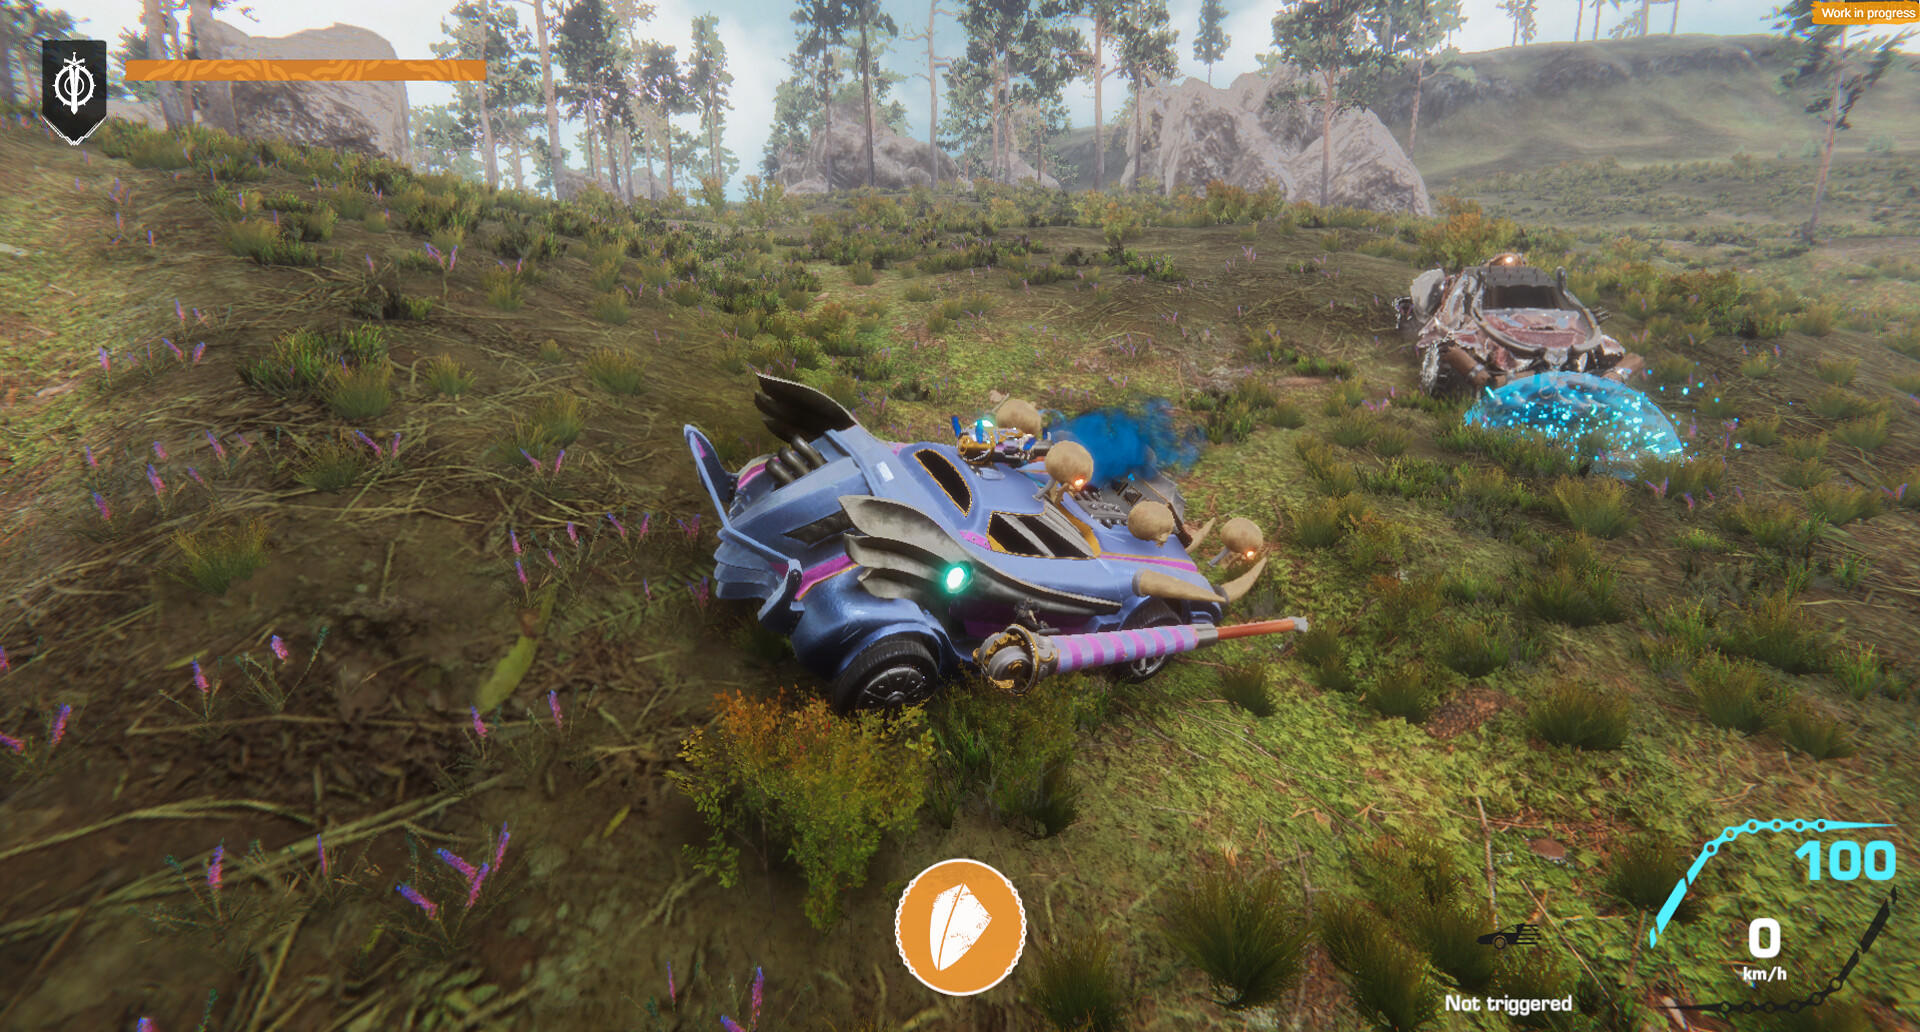 War of Wheels screenshot game